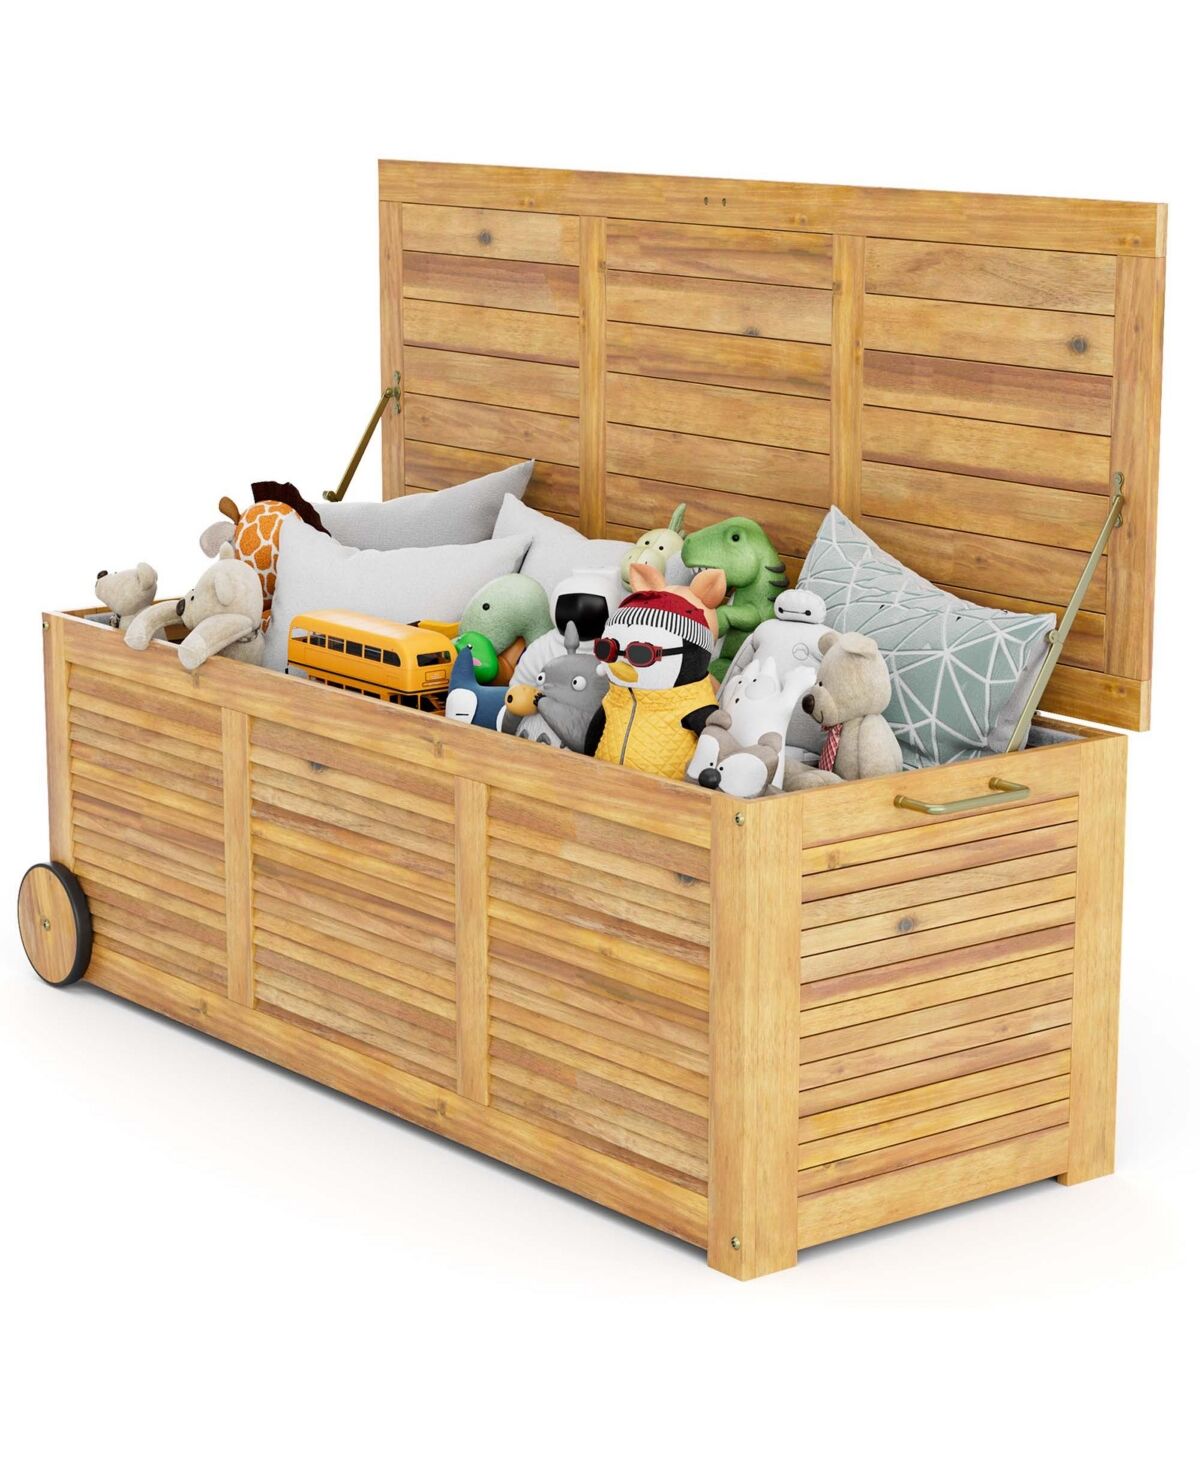 Costway 48 Gallon Acacia Wooden Patio Storage Deck Box Outdoor Storage Box with Wheels - Natural